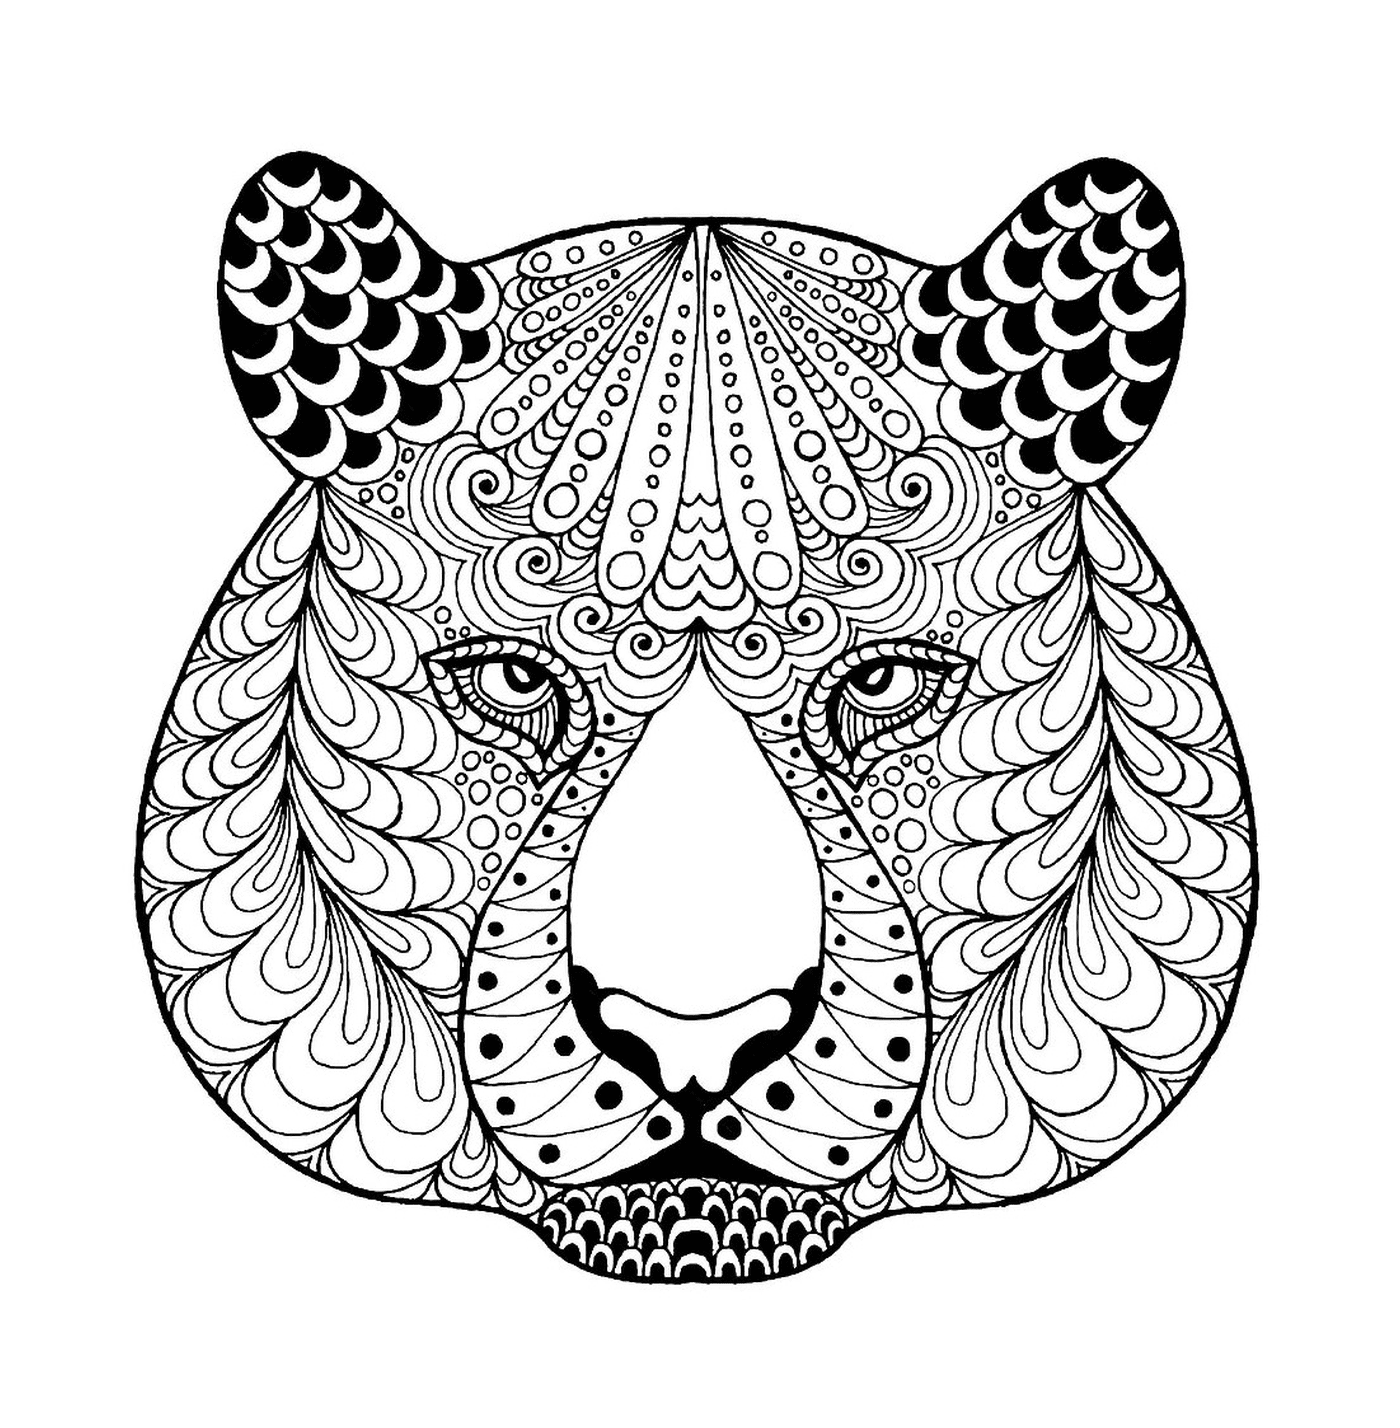   Une tête de tigre zentangle avec motifs 